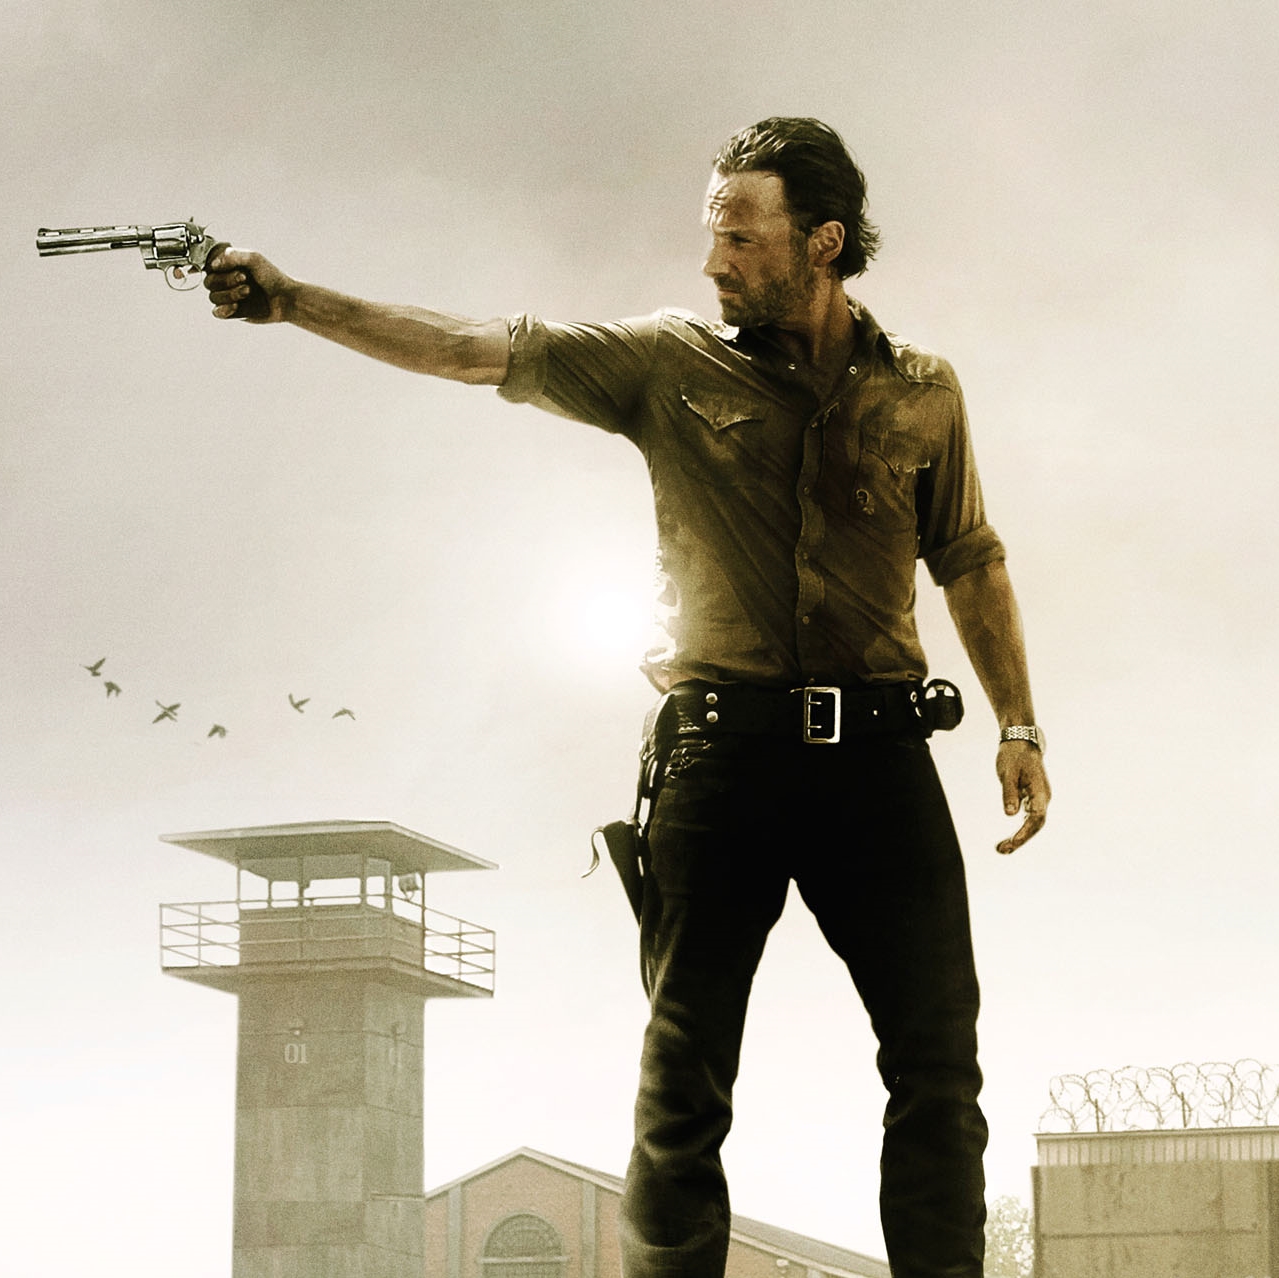 The Walking Dead - Season 3 - Poster Art - Frank Ockenfels/AMC